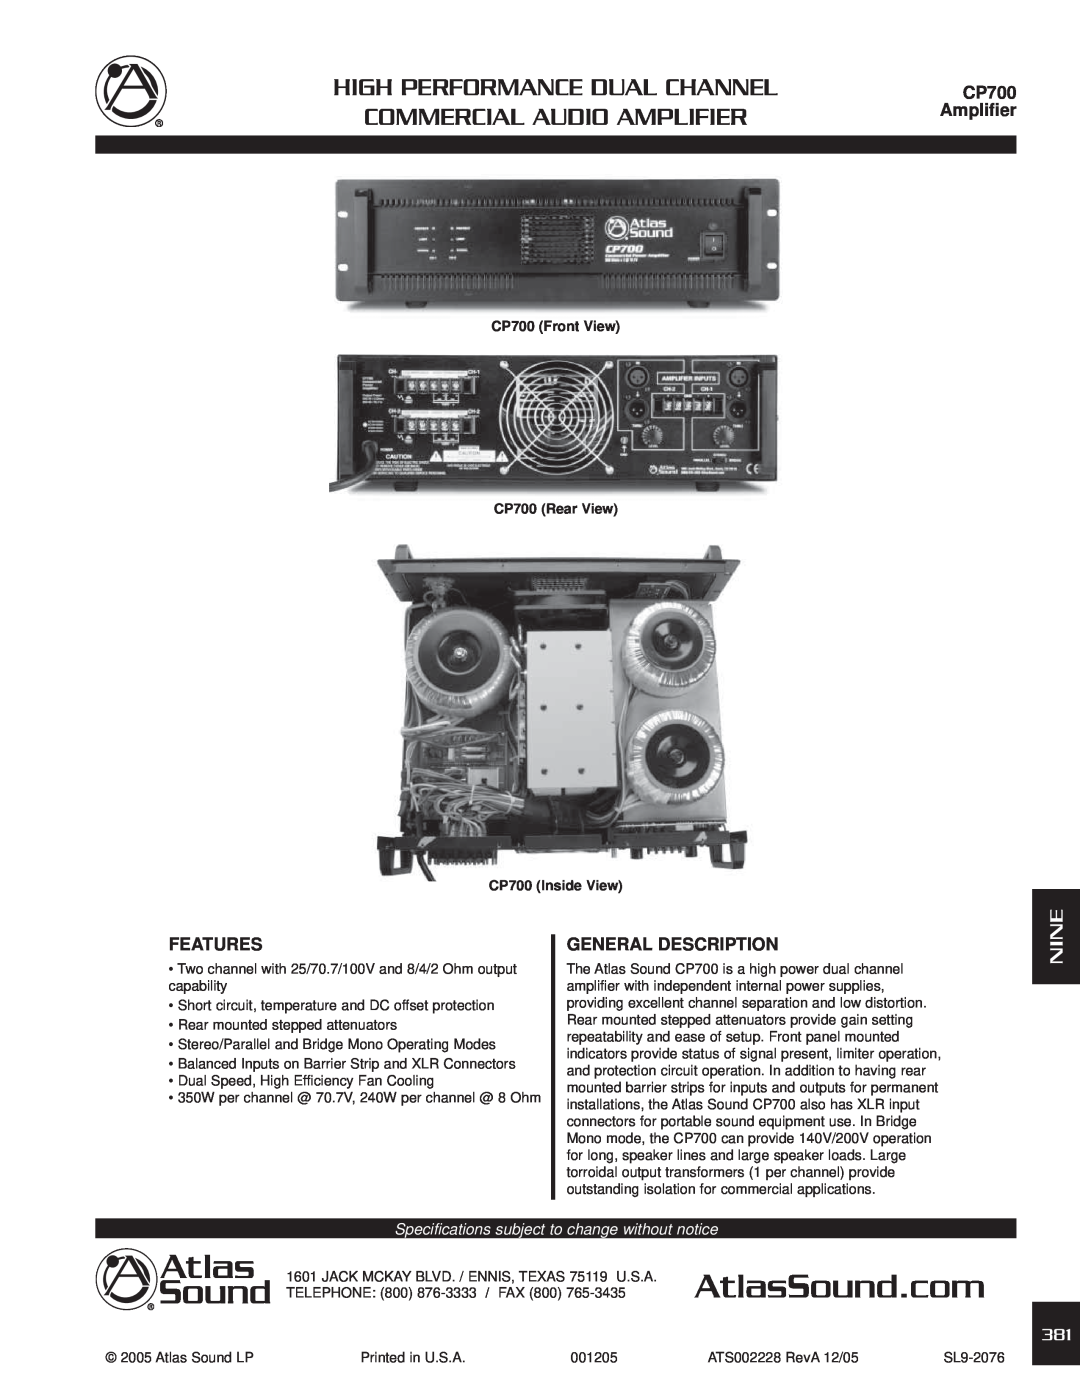 Soundolier specifications CP700 Amplifier, Features, General Description, High Performance Dual Channel, Nine 